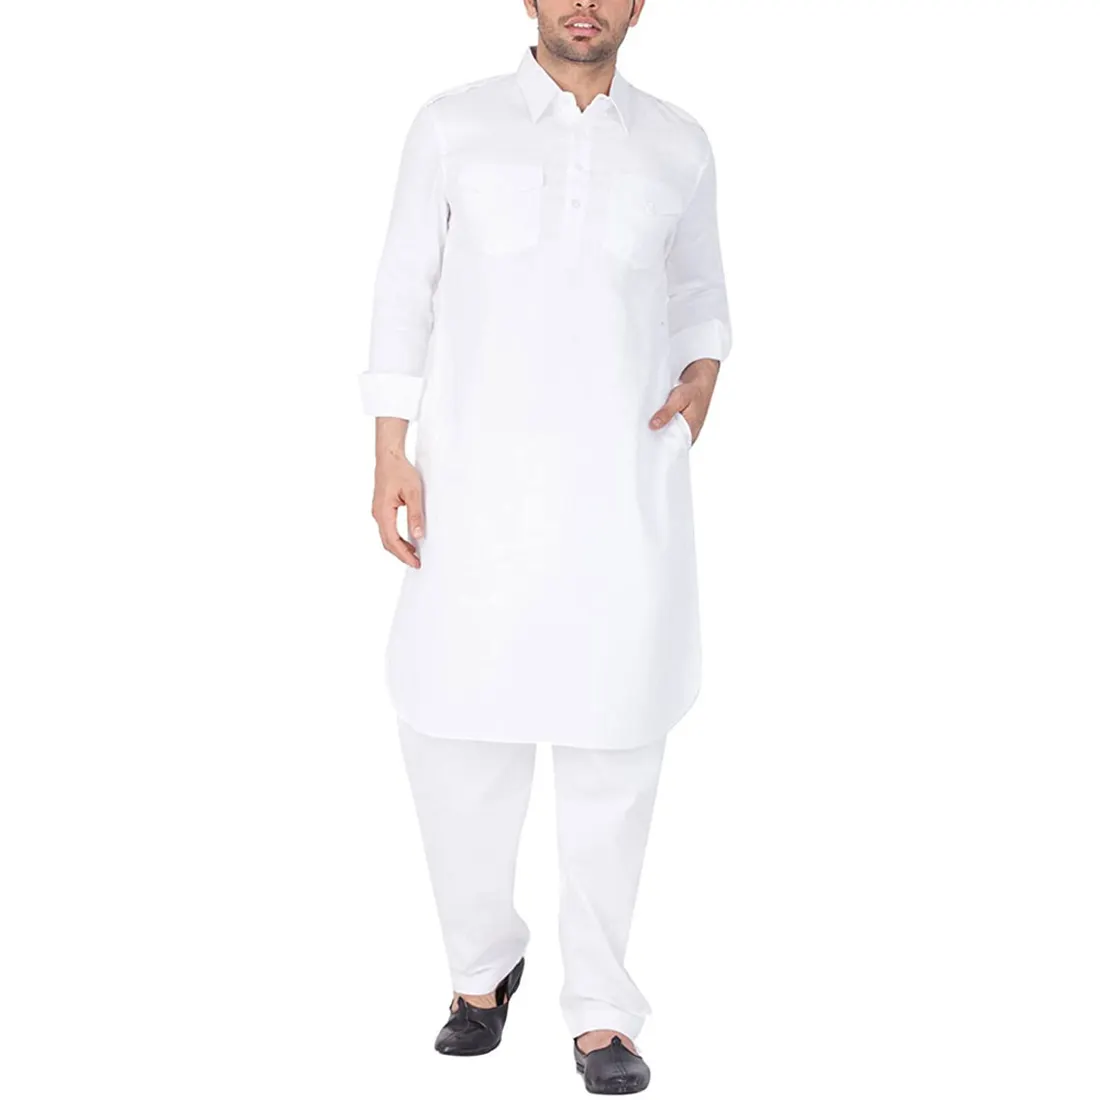 Baru gaya pria gaun Shalwar Kameez desain terbaru dalam pakaian kasual pria Shalwar Kameez Set